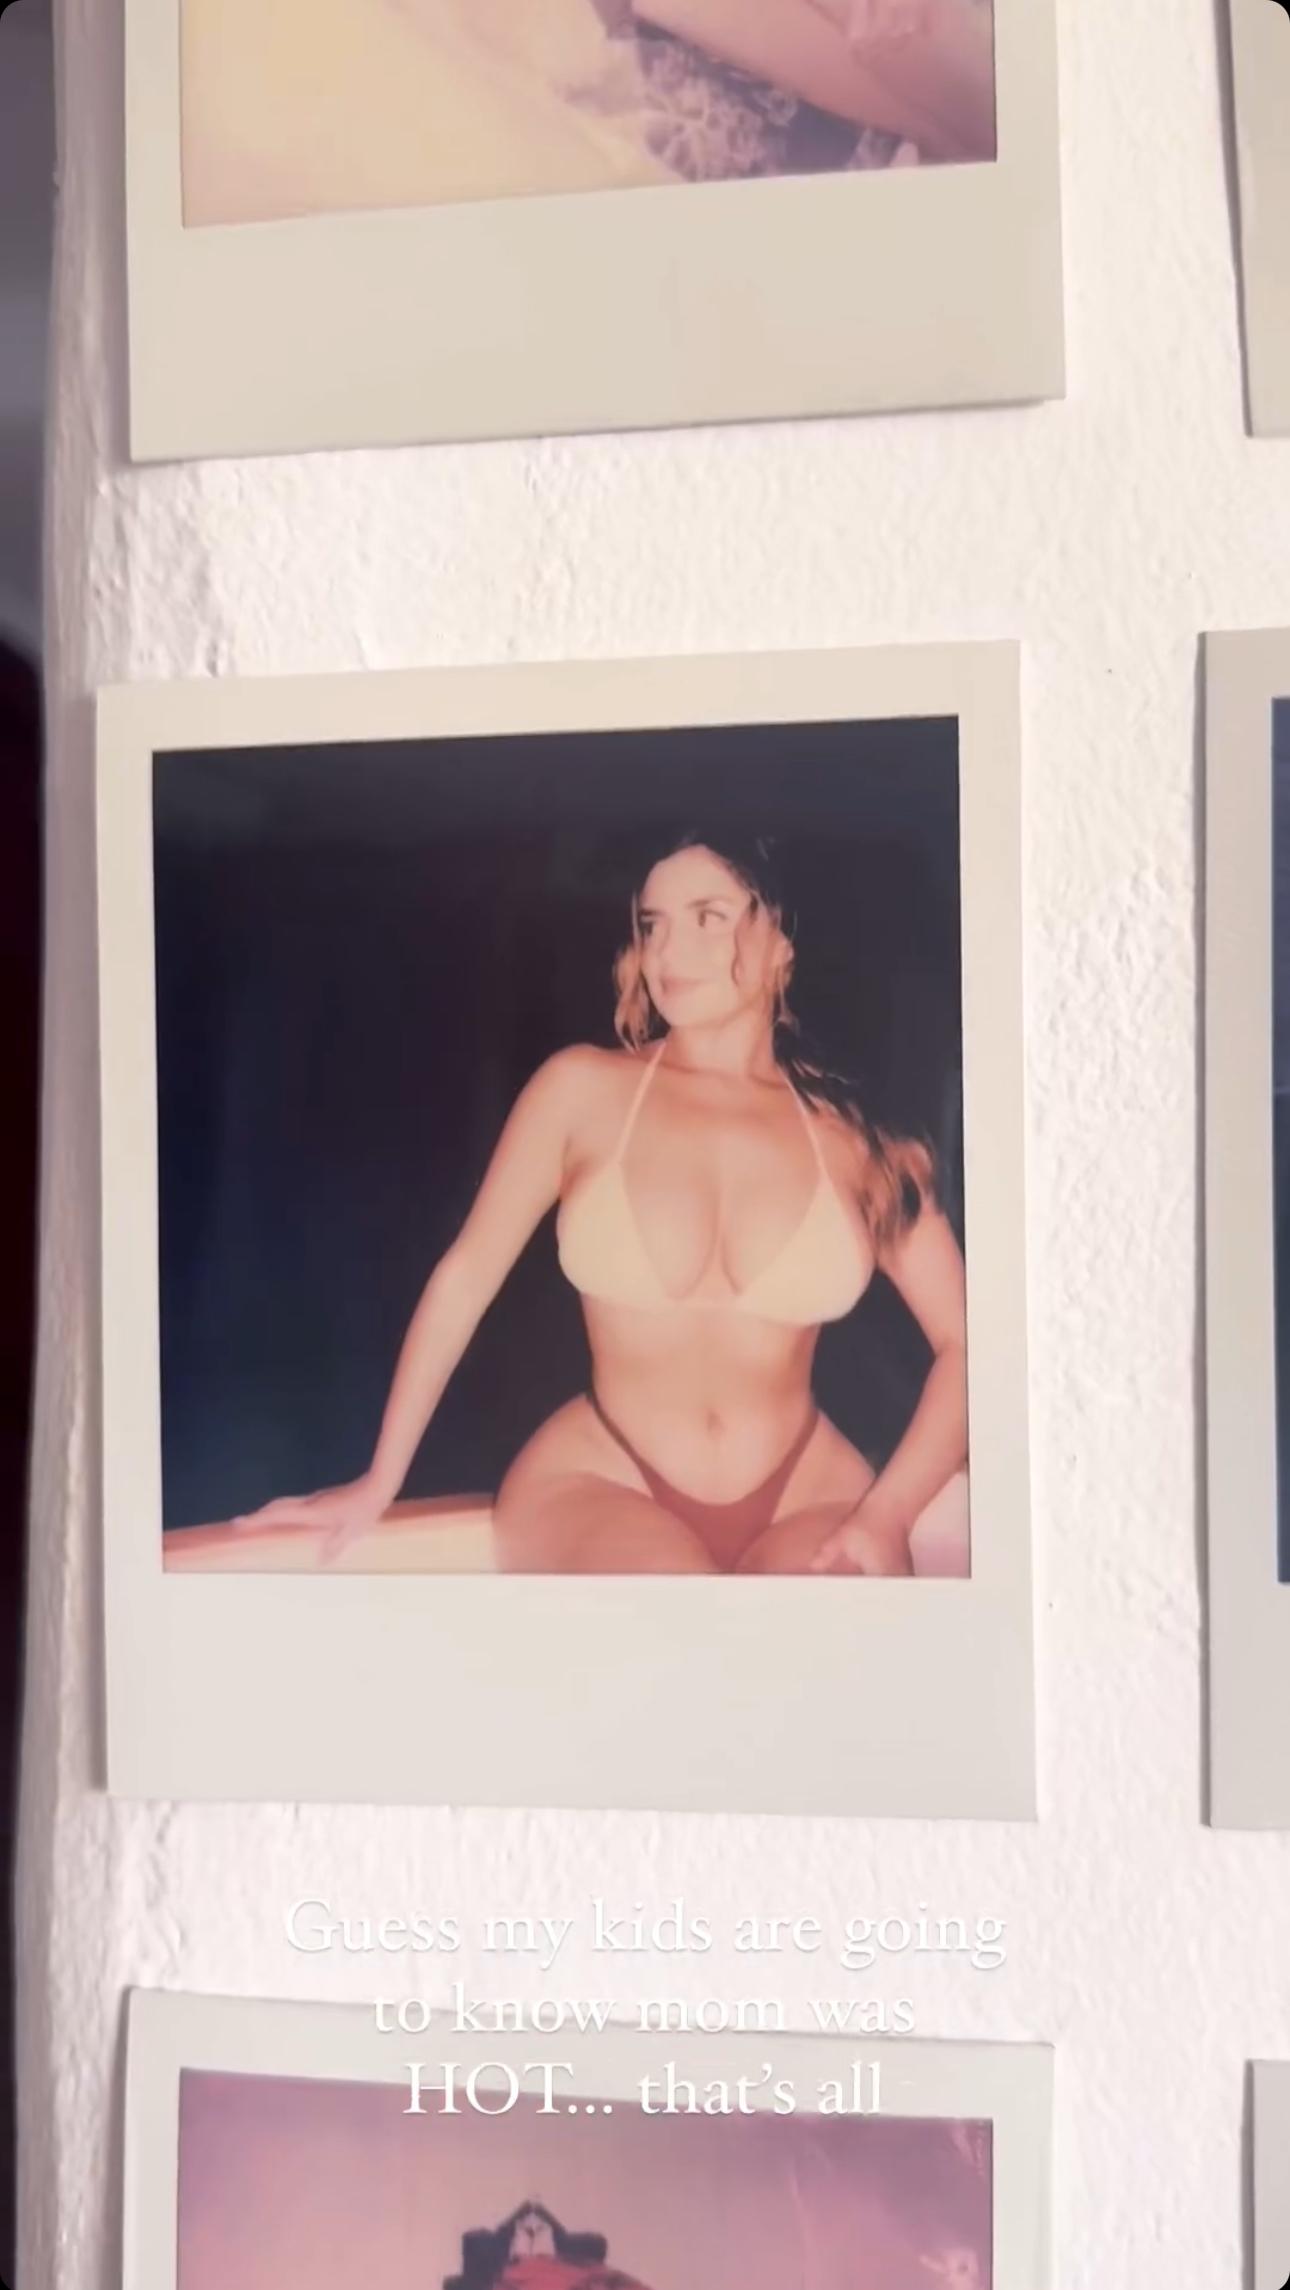 A polaroid photo of Demi Rose in a bikini.